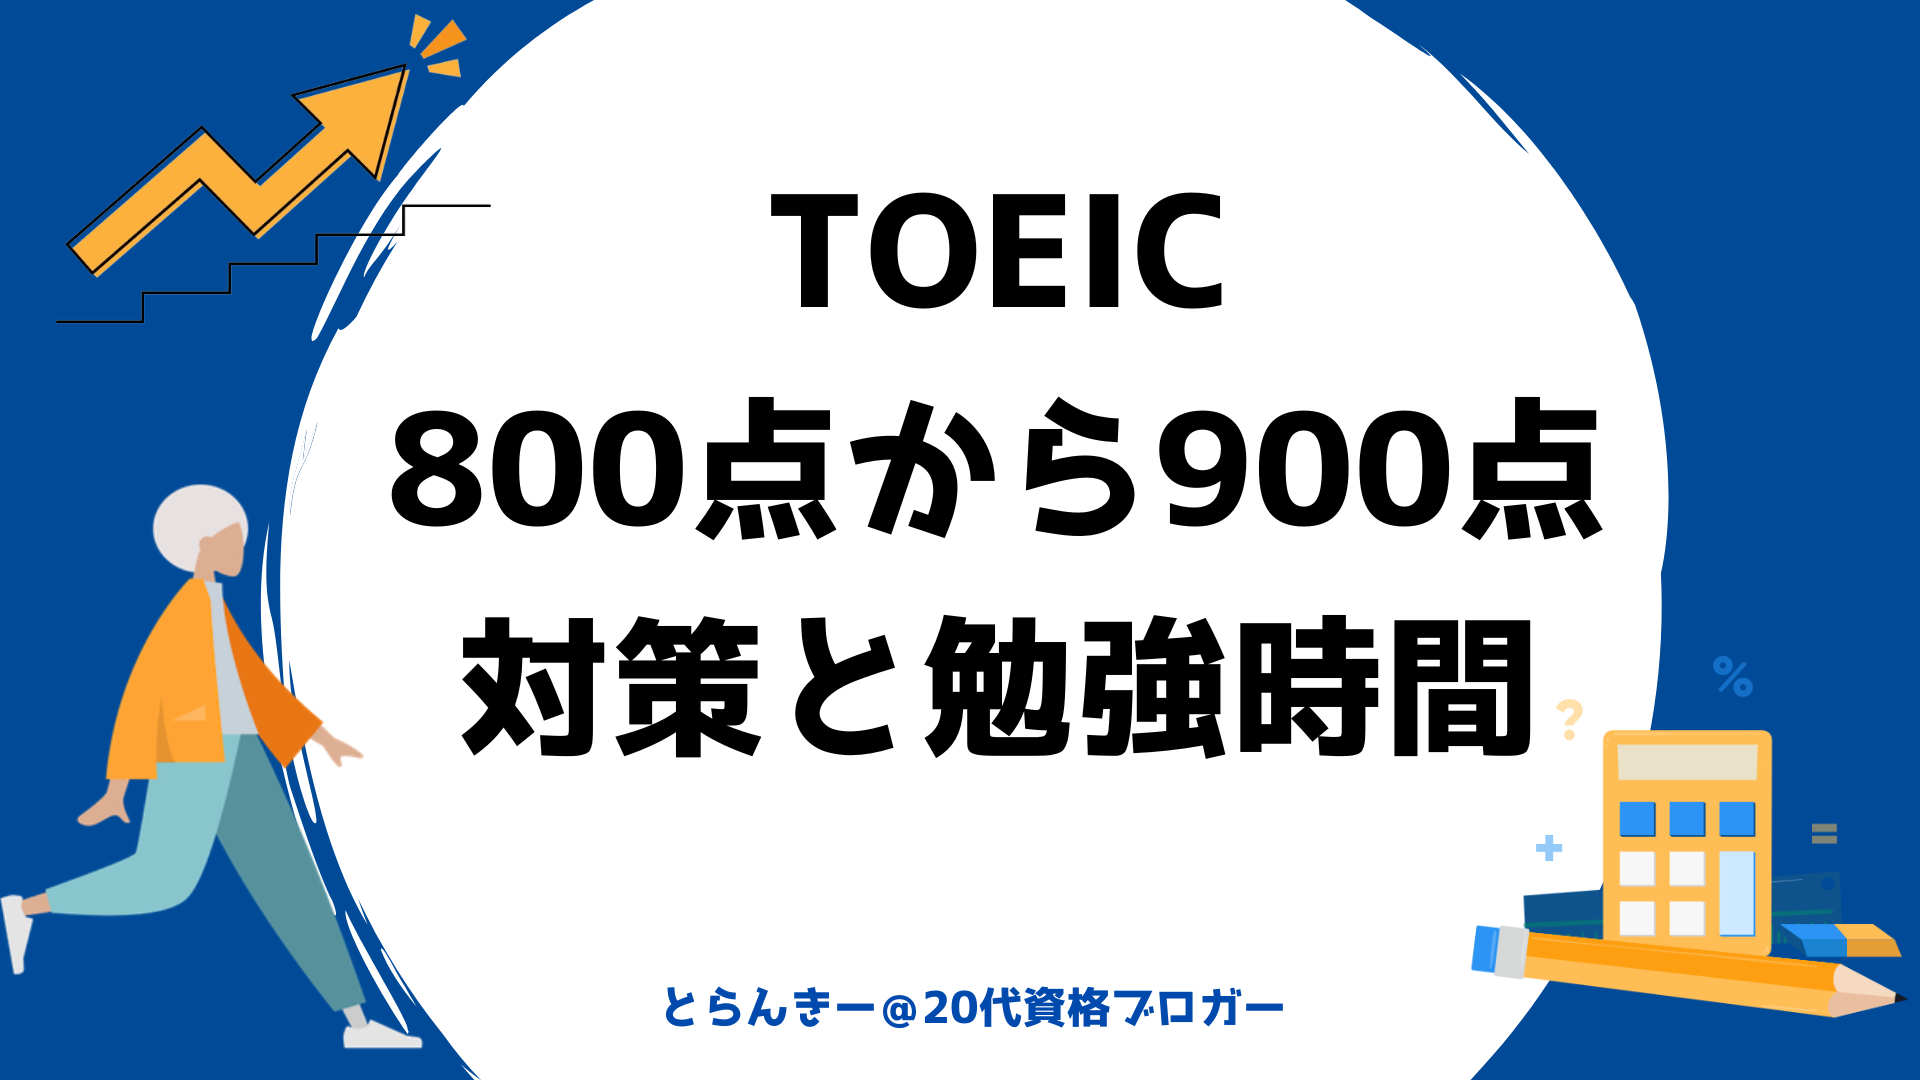 TOEIC 800から900